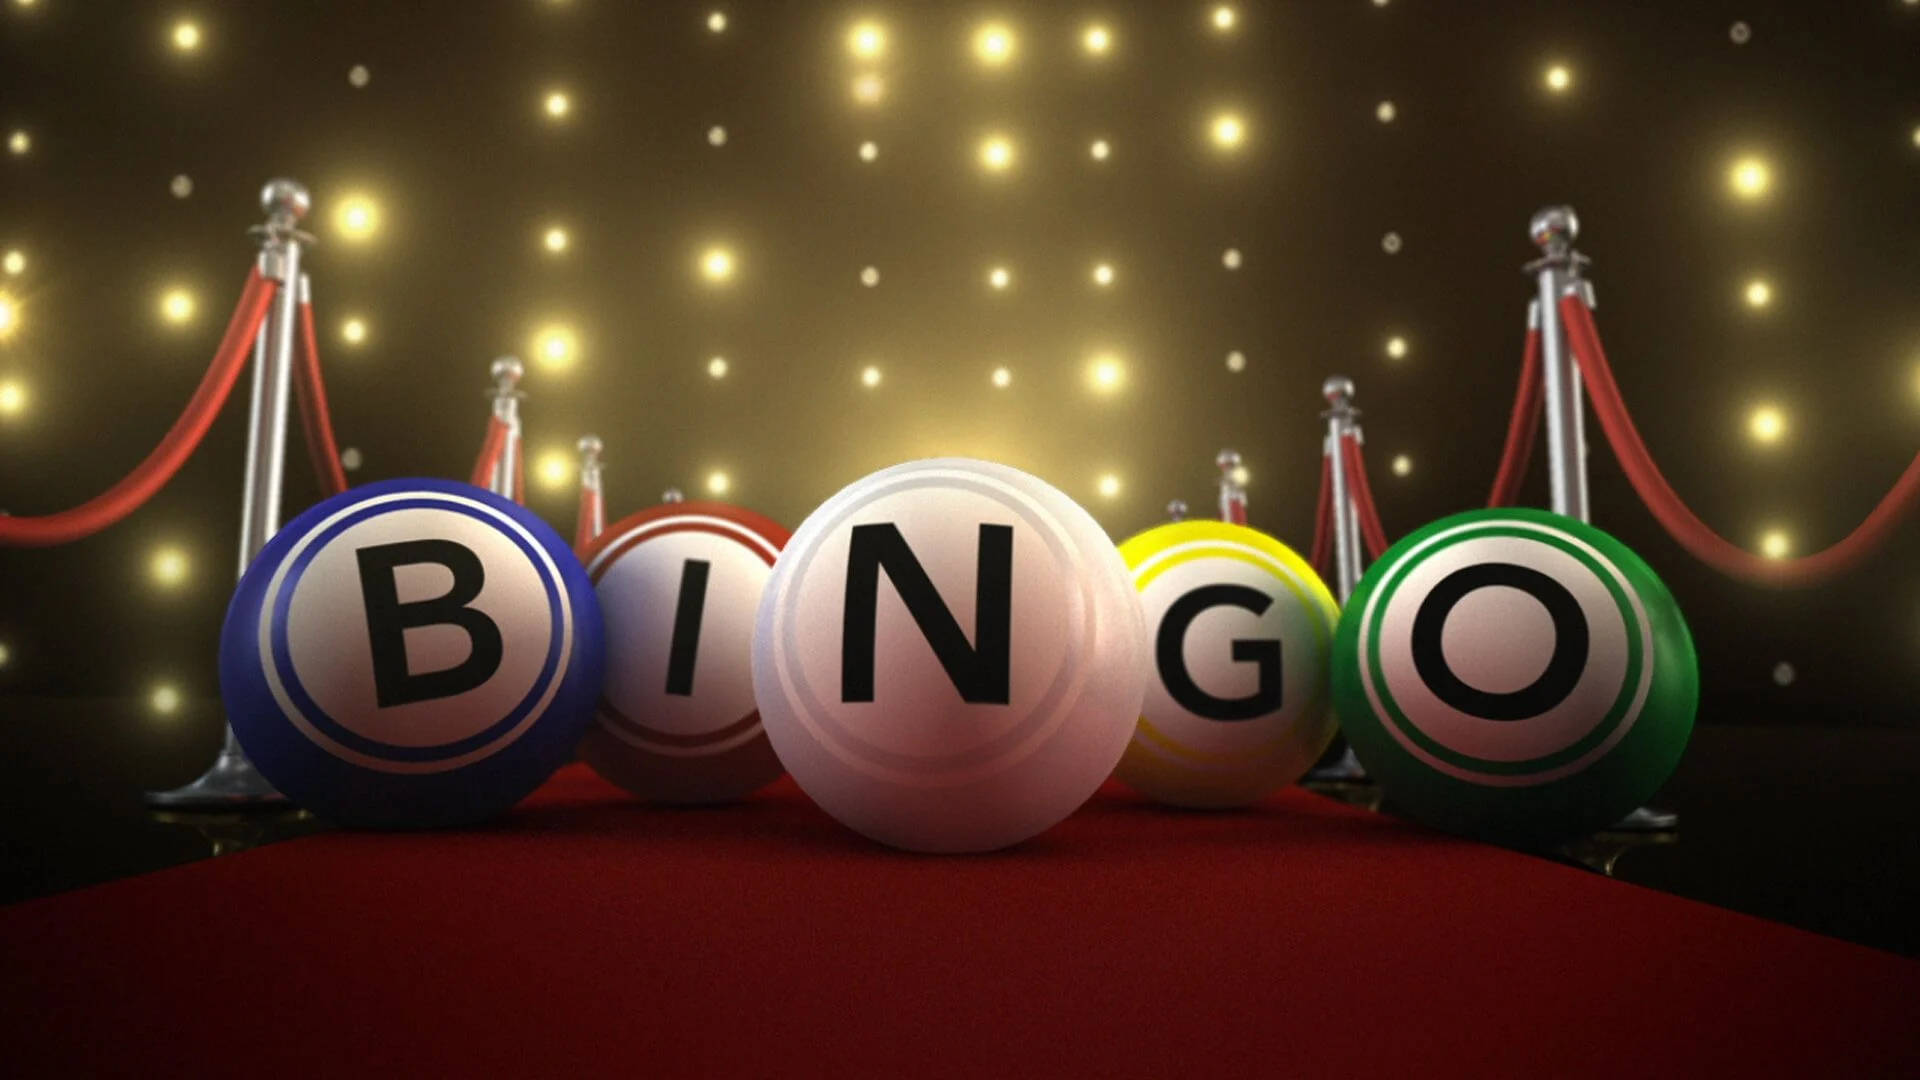 Bingo Ball In Red Carpet Background